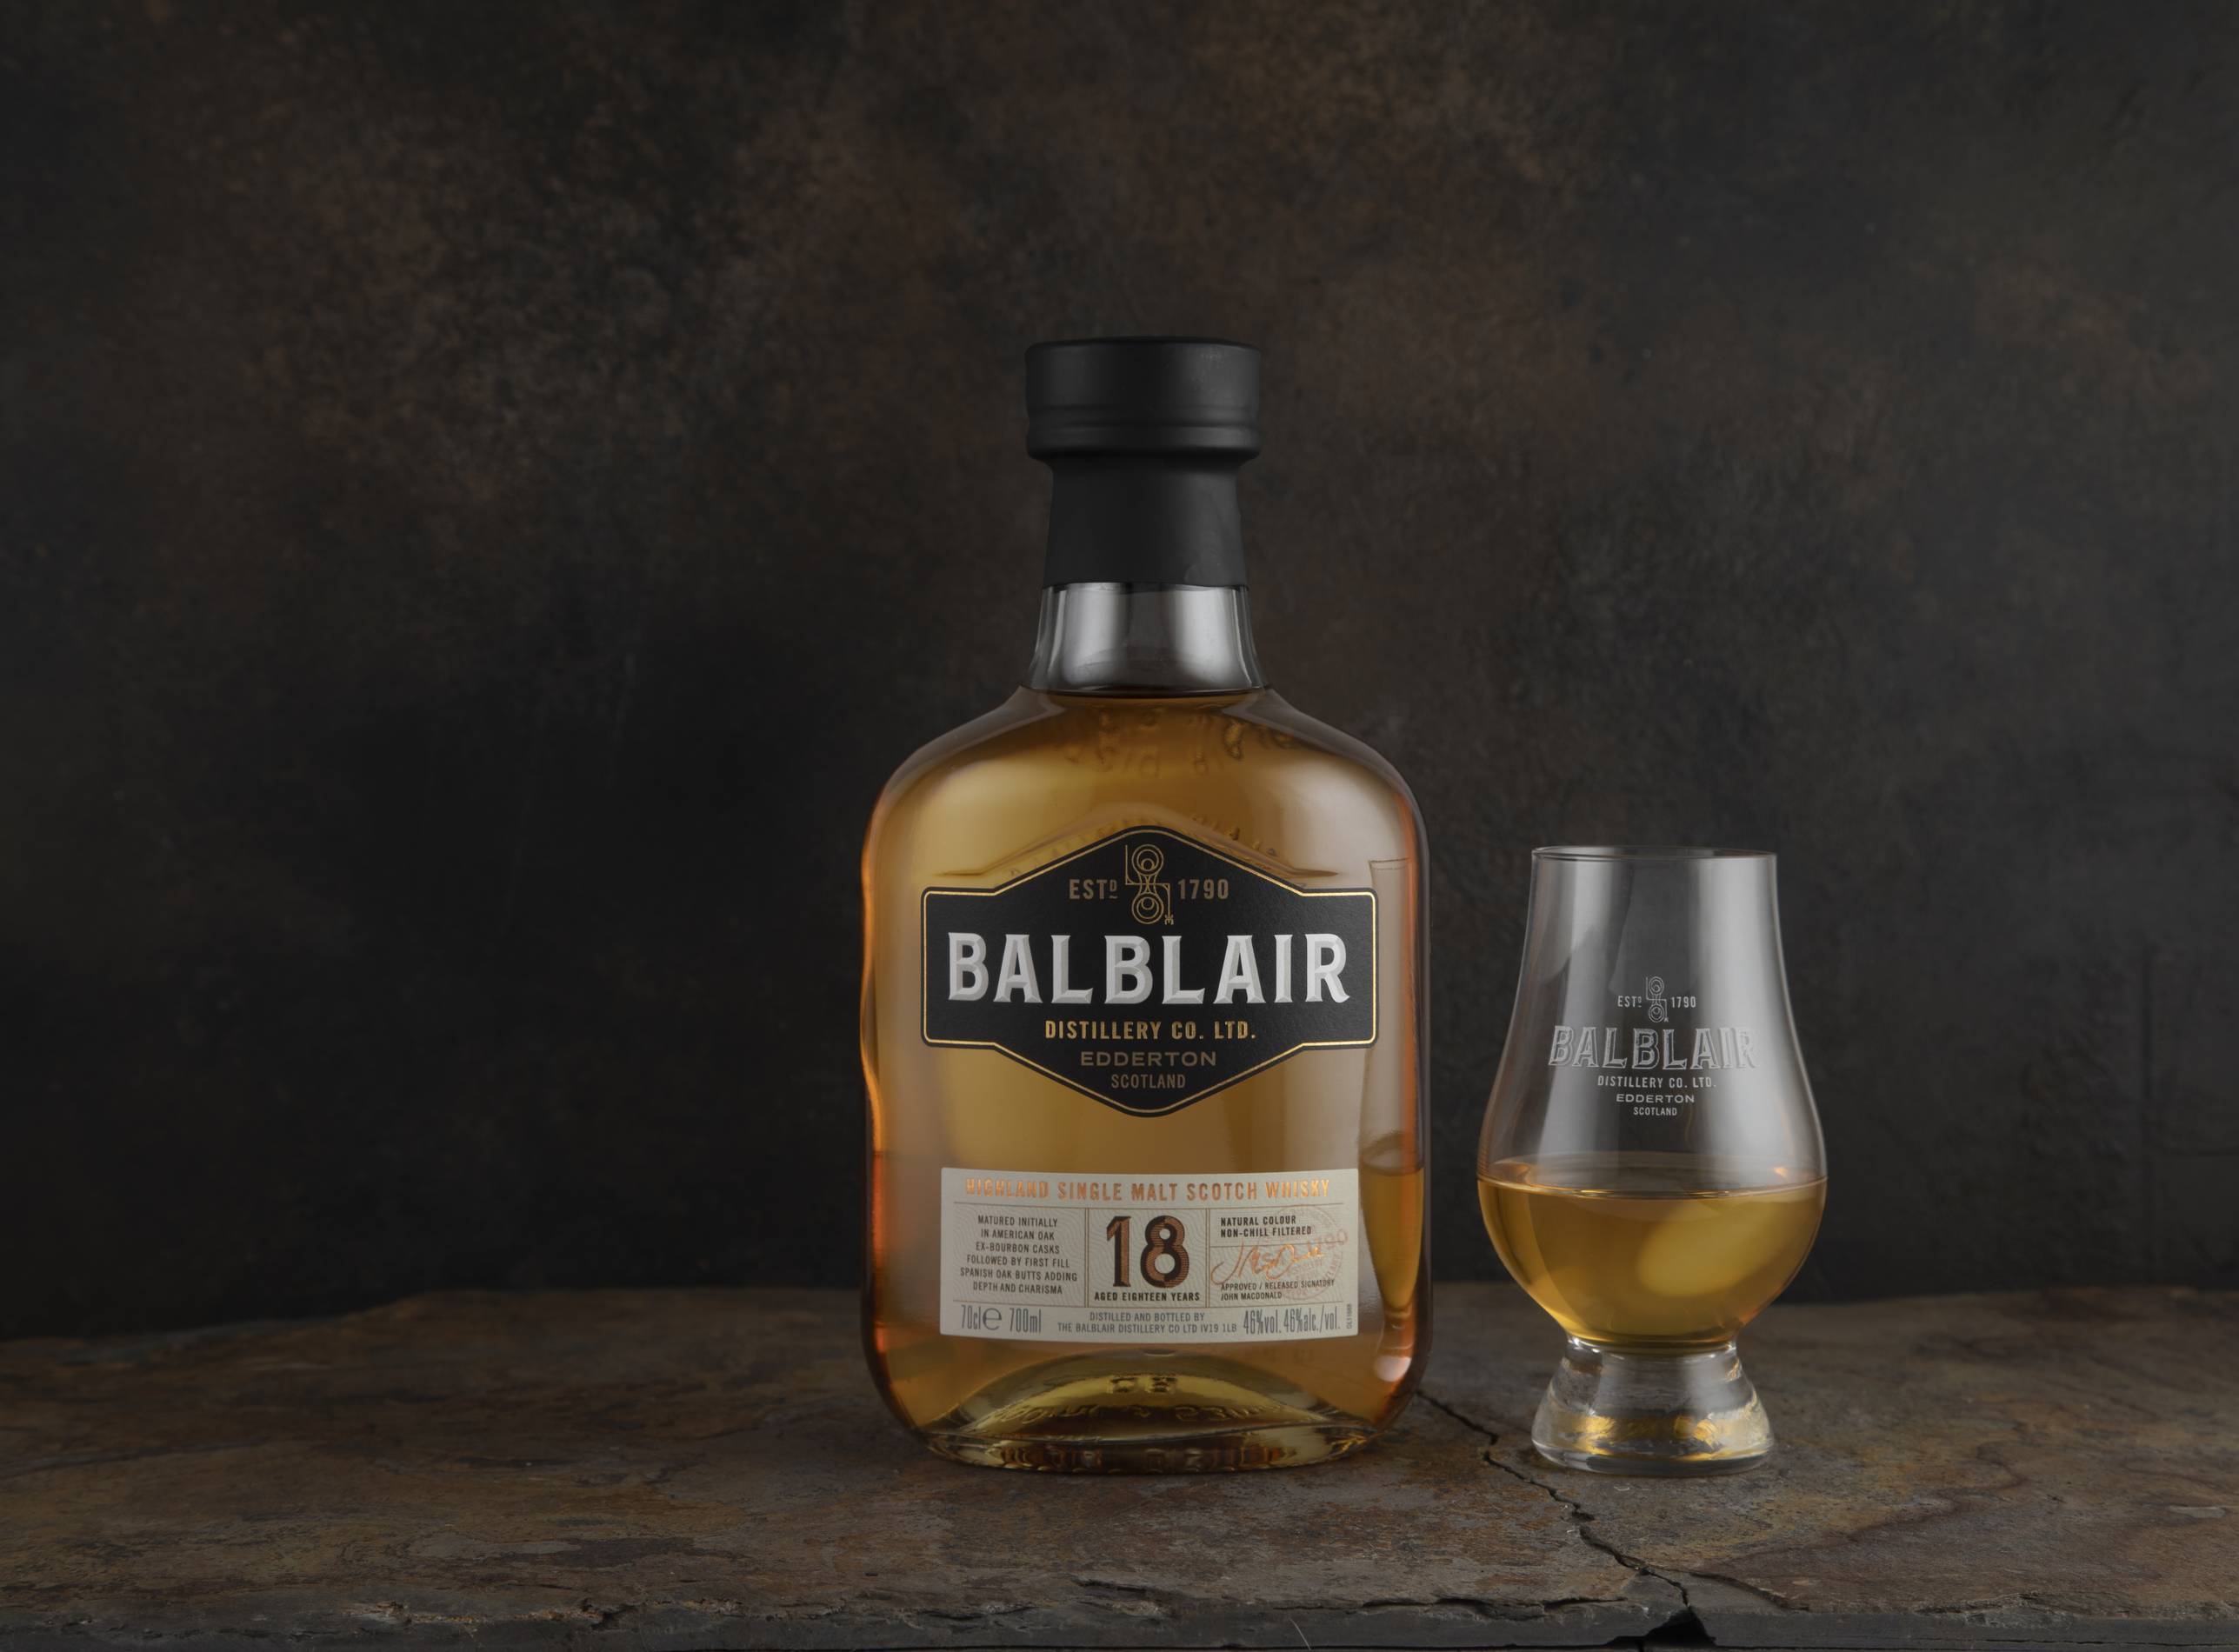 Balbair 18 year old single malt scotch bottle